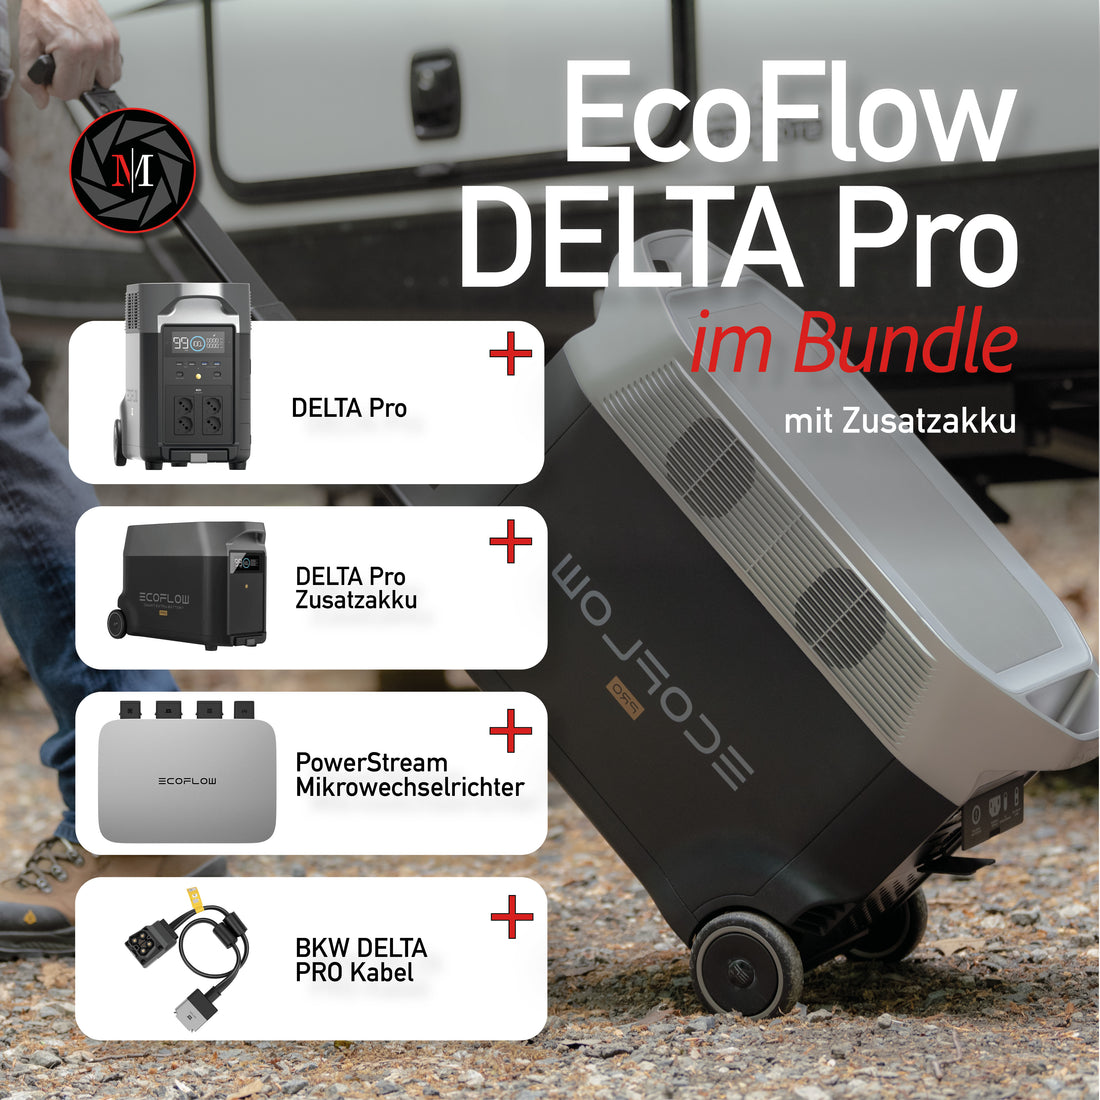 EcoFlow Delta Pro 7,2 kWh Bundle Set (Delta Pro + Zusatzakku Delta Pro + Powerstream + BKW-Delta Pro Kabel)